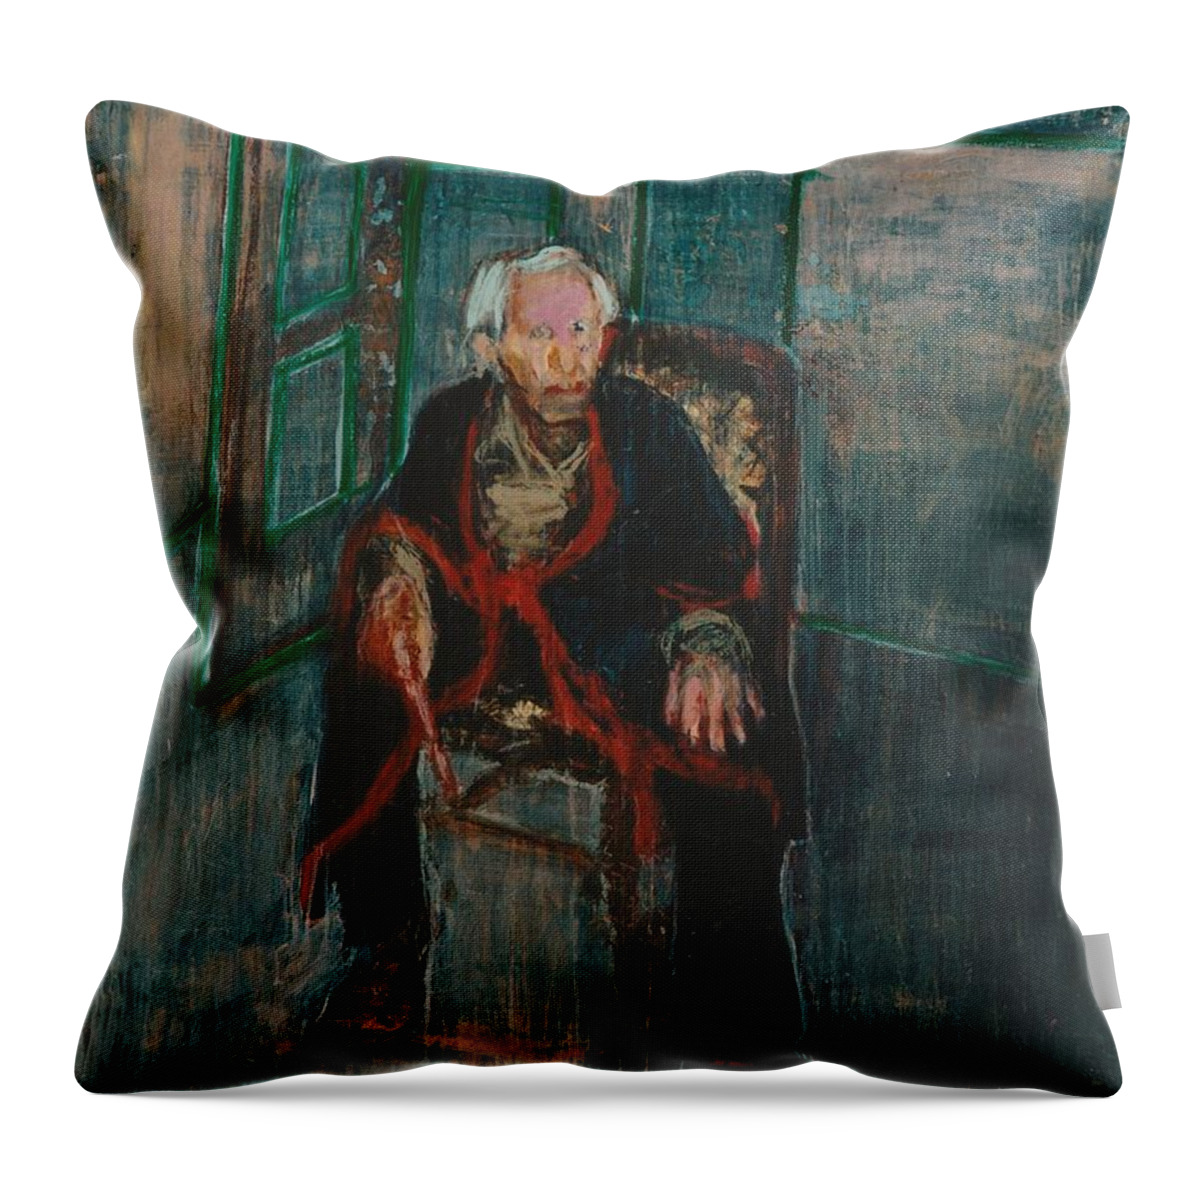 Oldman Throw Pillow featuring the painting Yehuda Sitting by Galya Tarmu